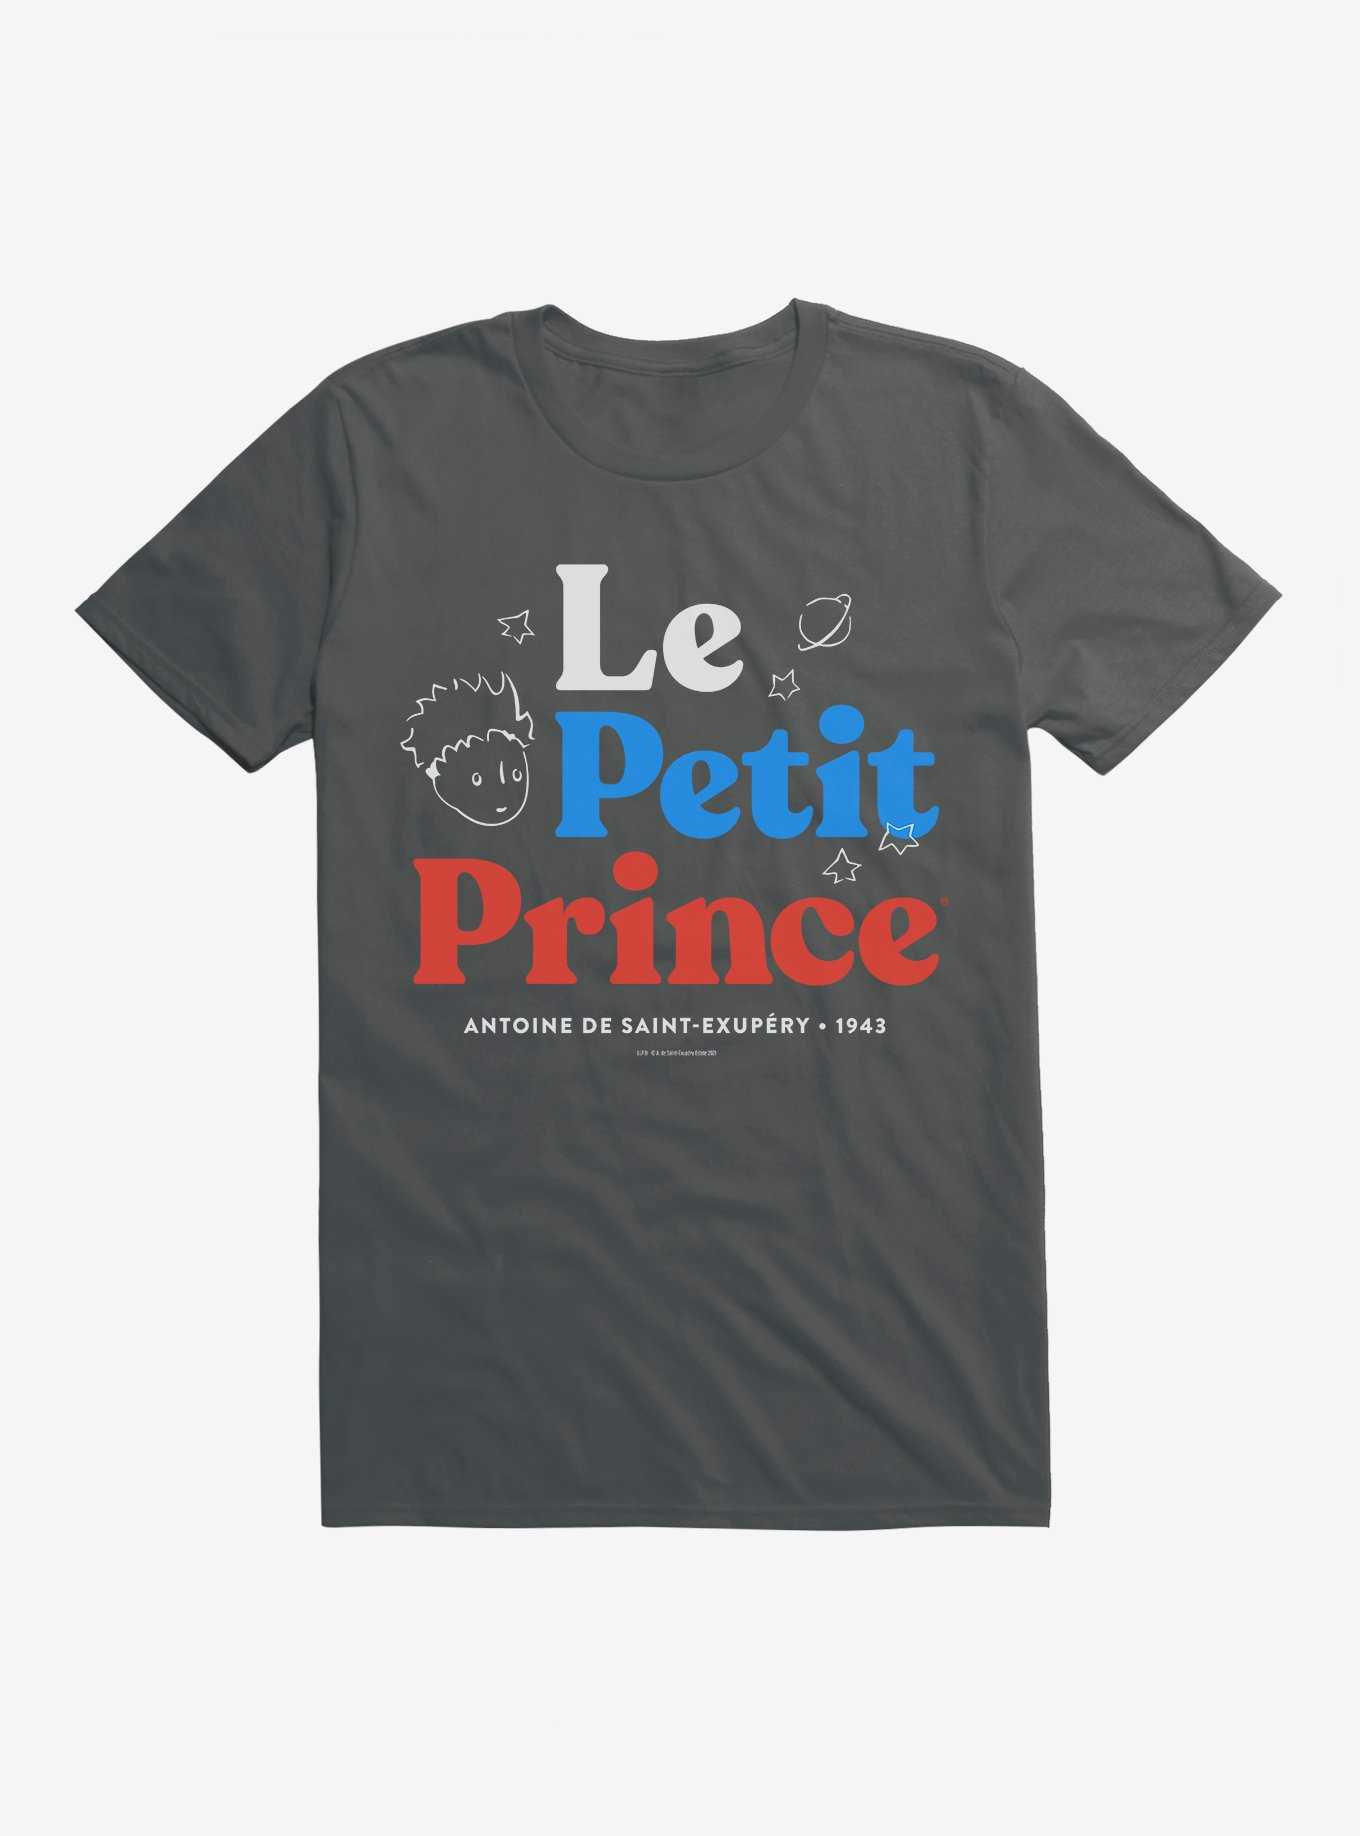 The Little Prince Le Petit Prince Typography T-Shirt, , hi-res